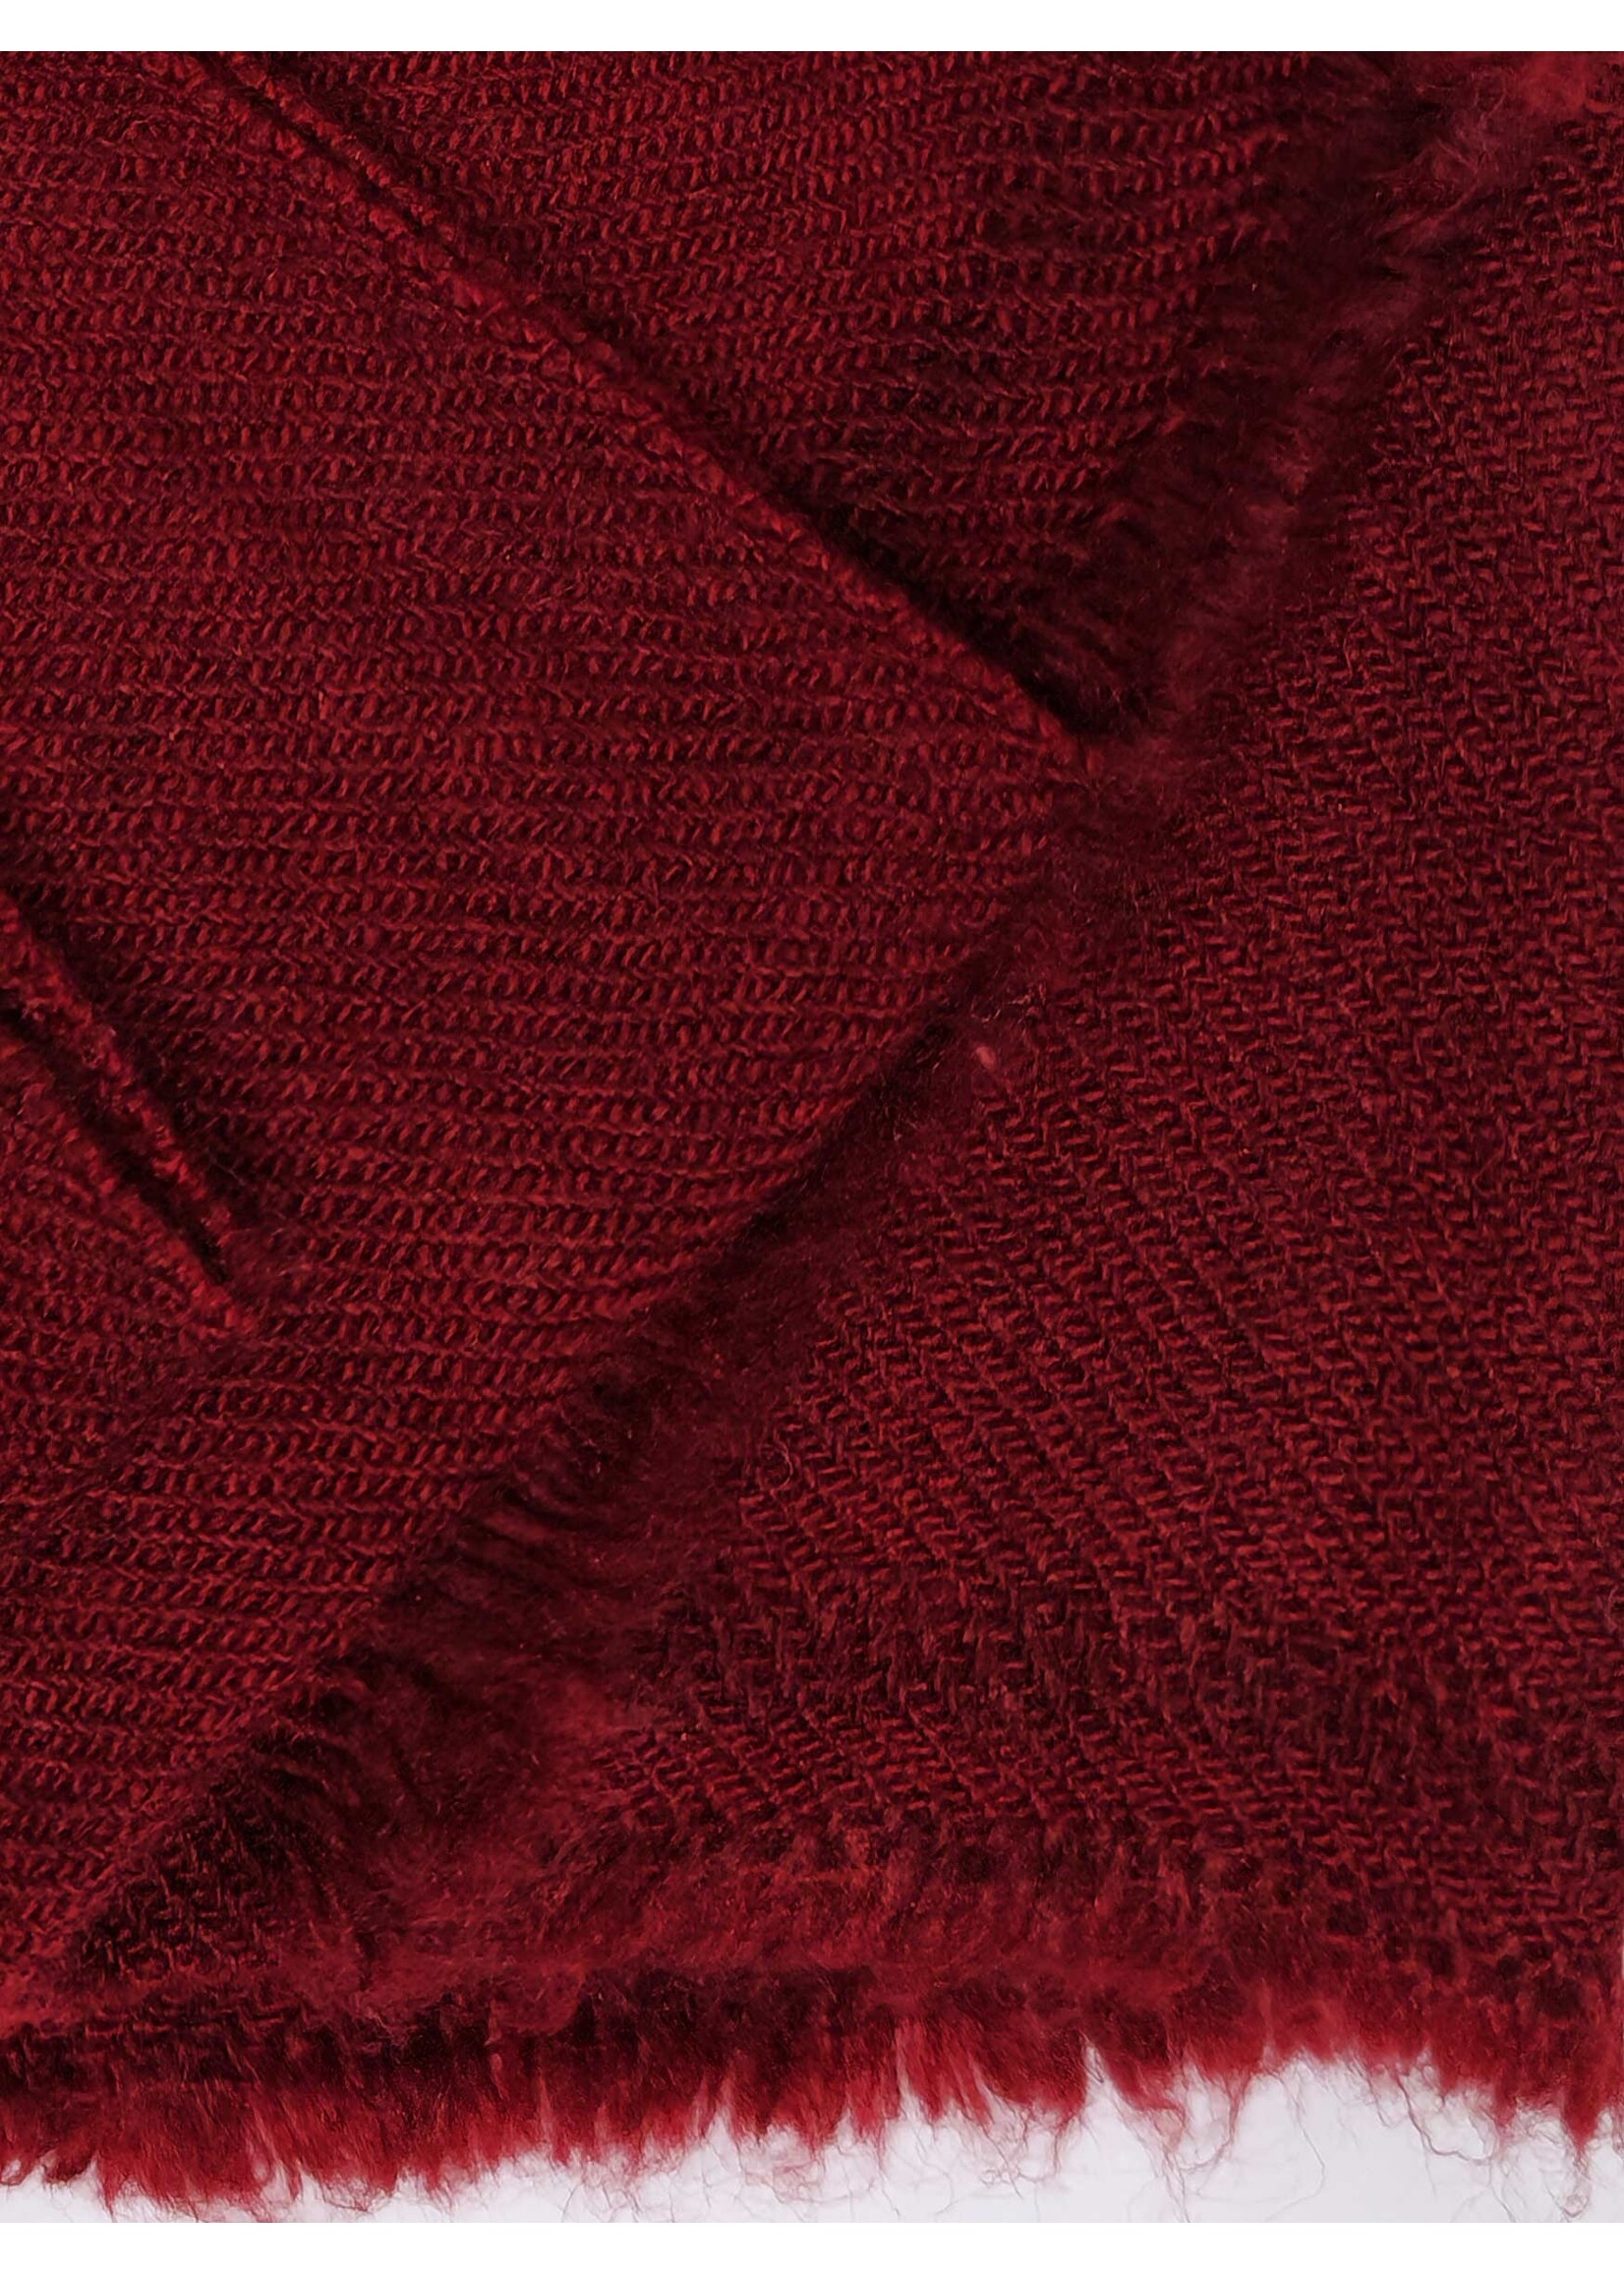 Écharpe pashmina rouge bourgogne, 35 x 160 cm